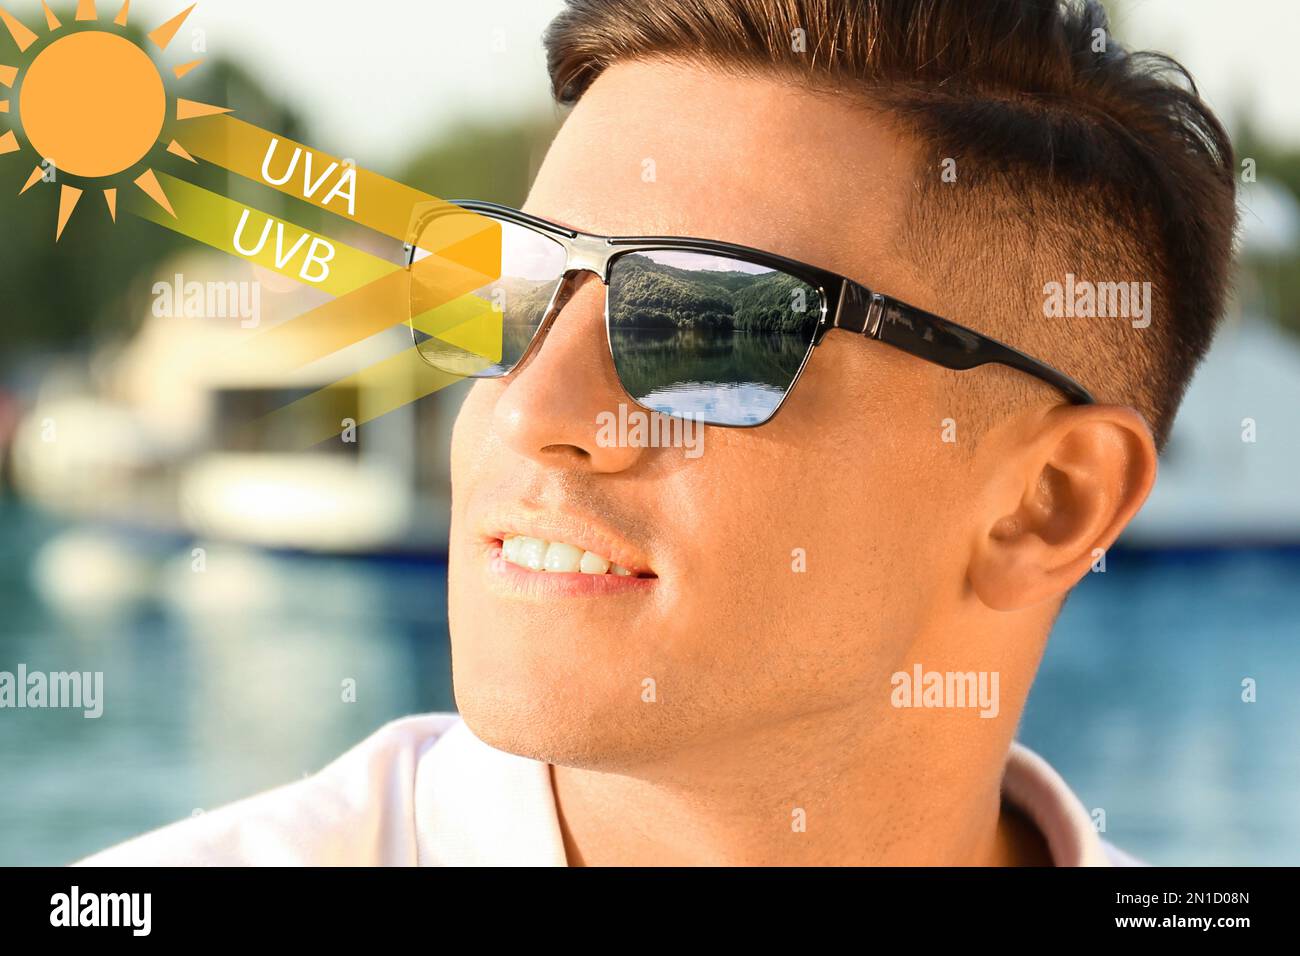 Sunglasses that block both uva and uvb rays hi-res stock